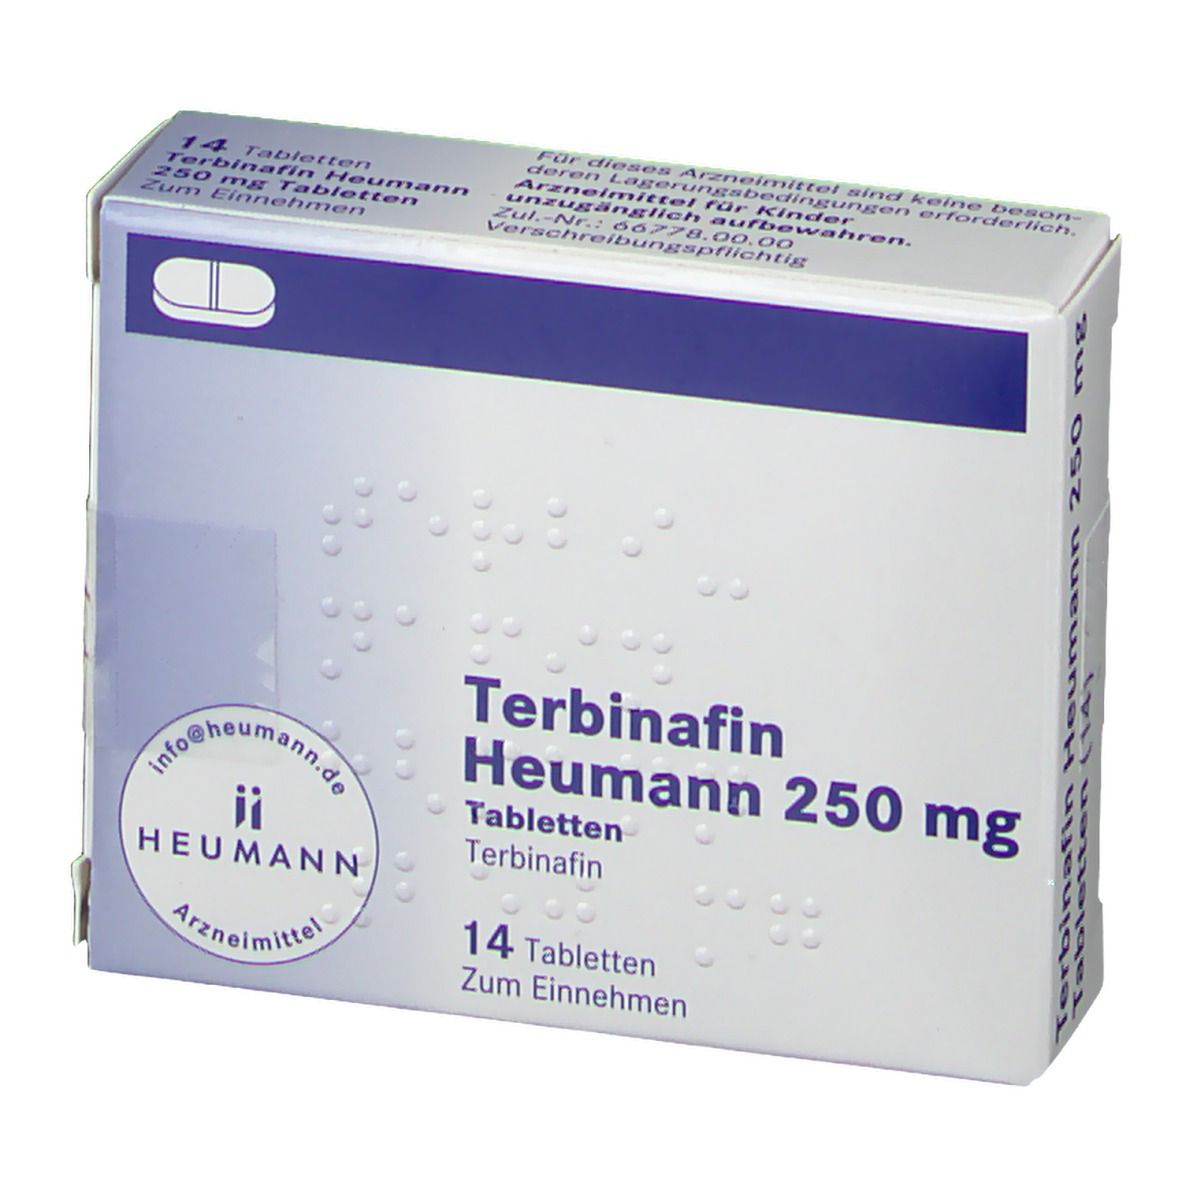 Terbinafin Heumann 250 mg